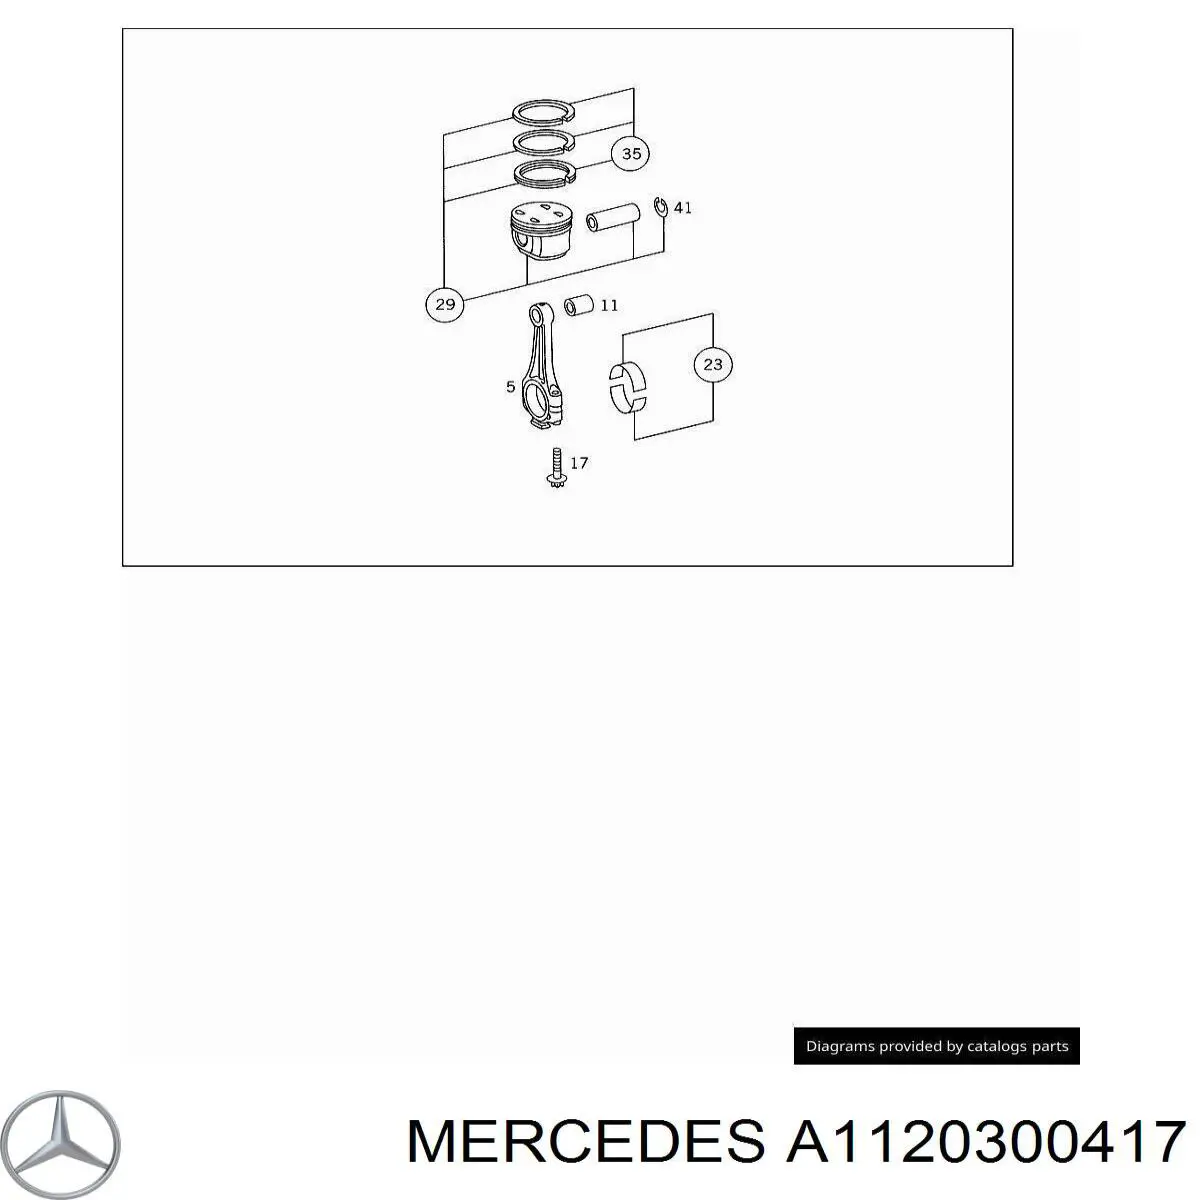 A1120370901 Mercedes поршень в комплекте на 1 цилиндр, std